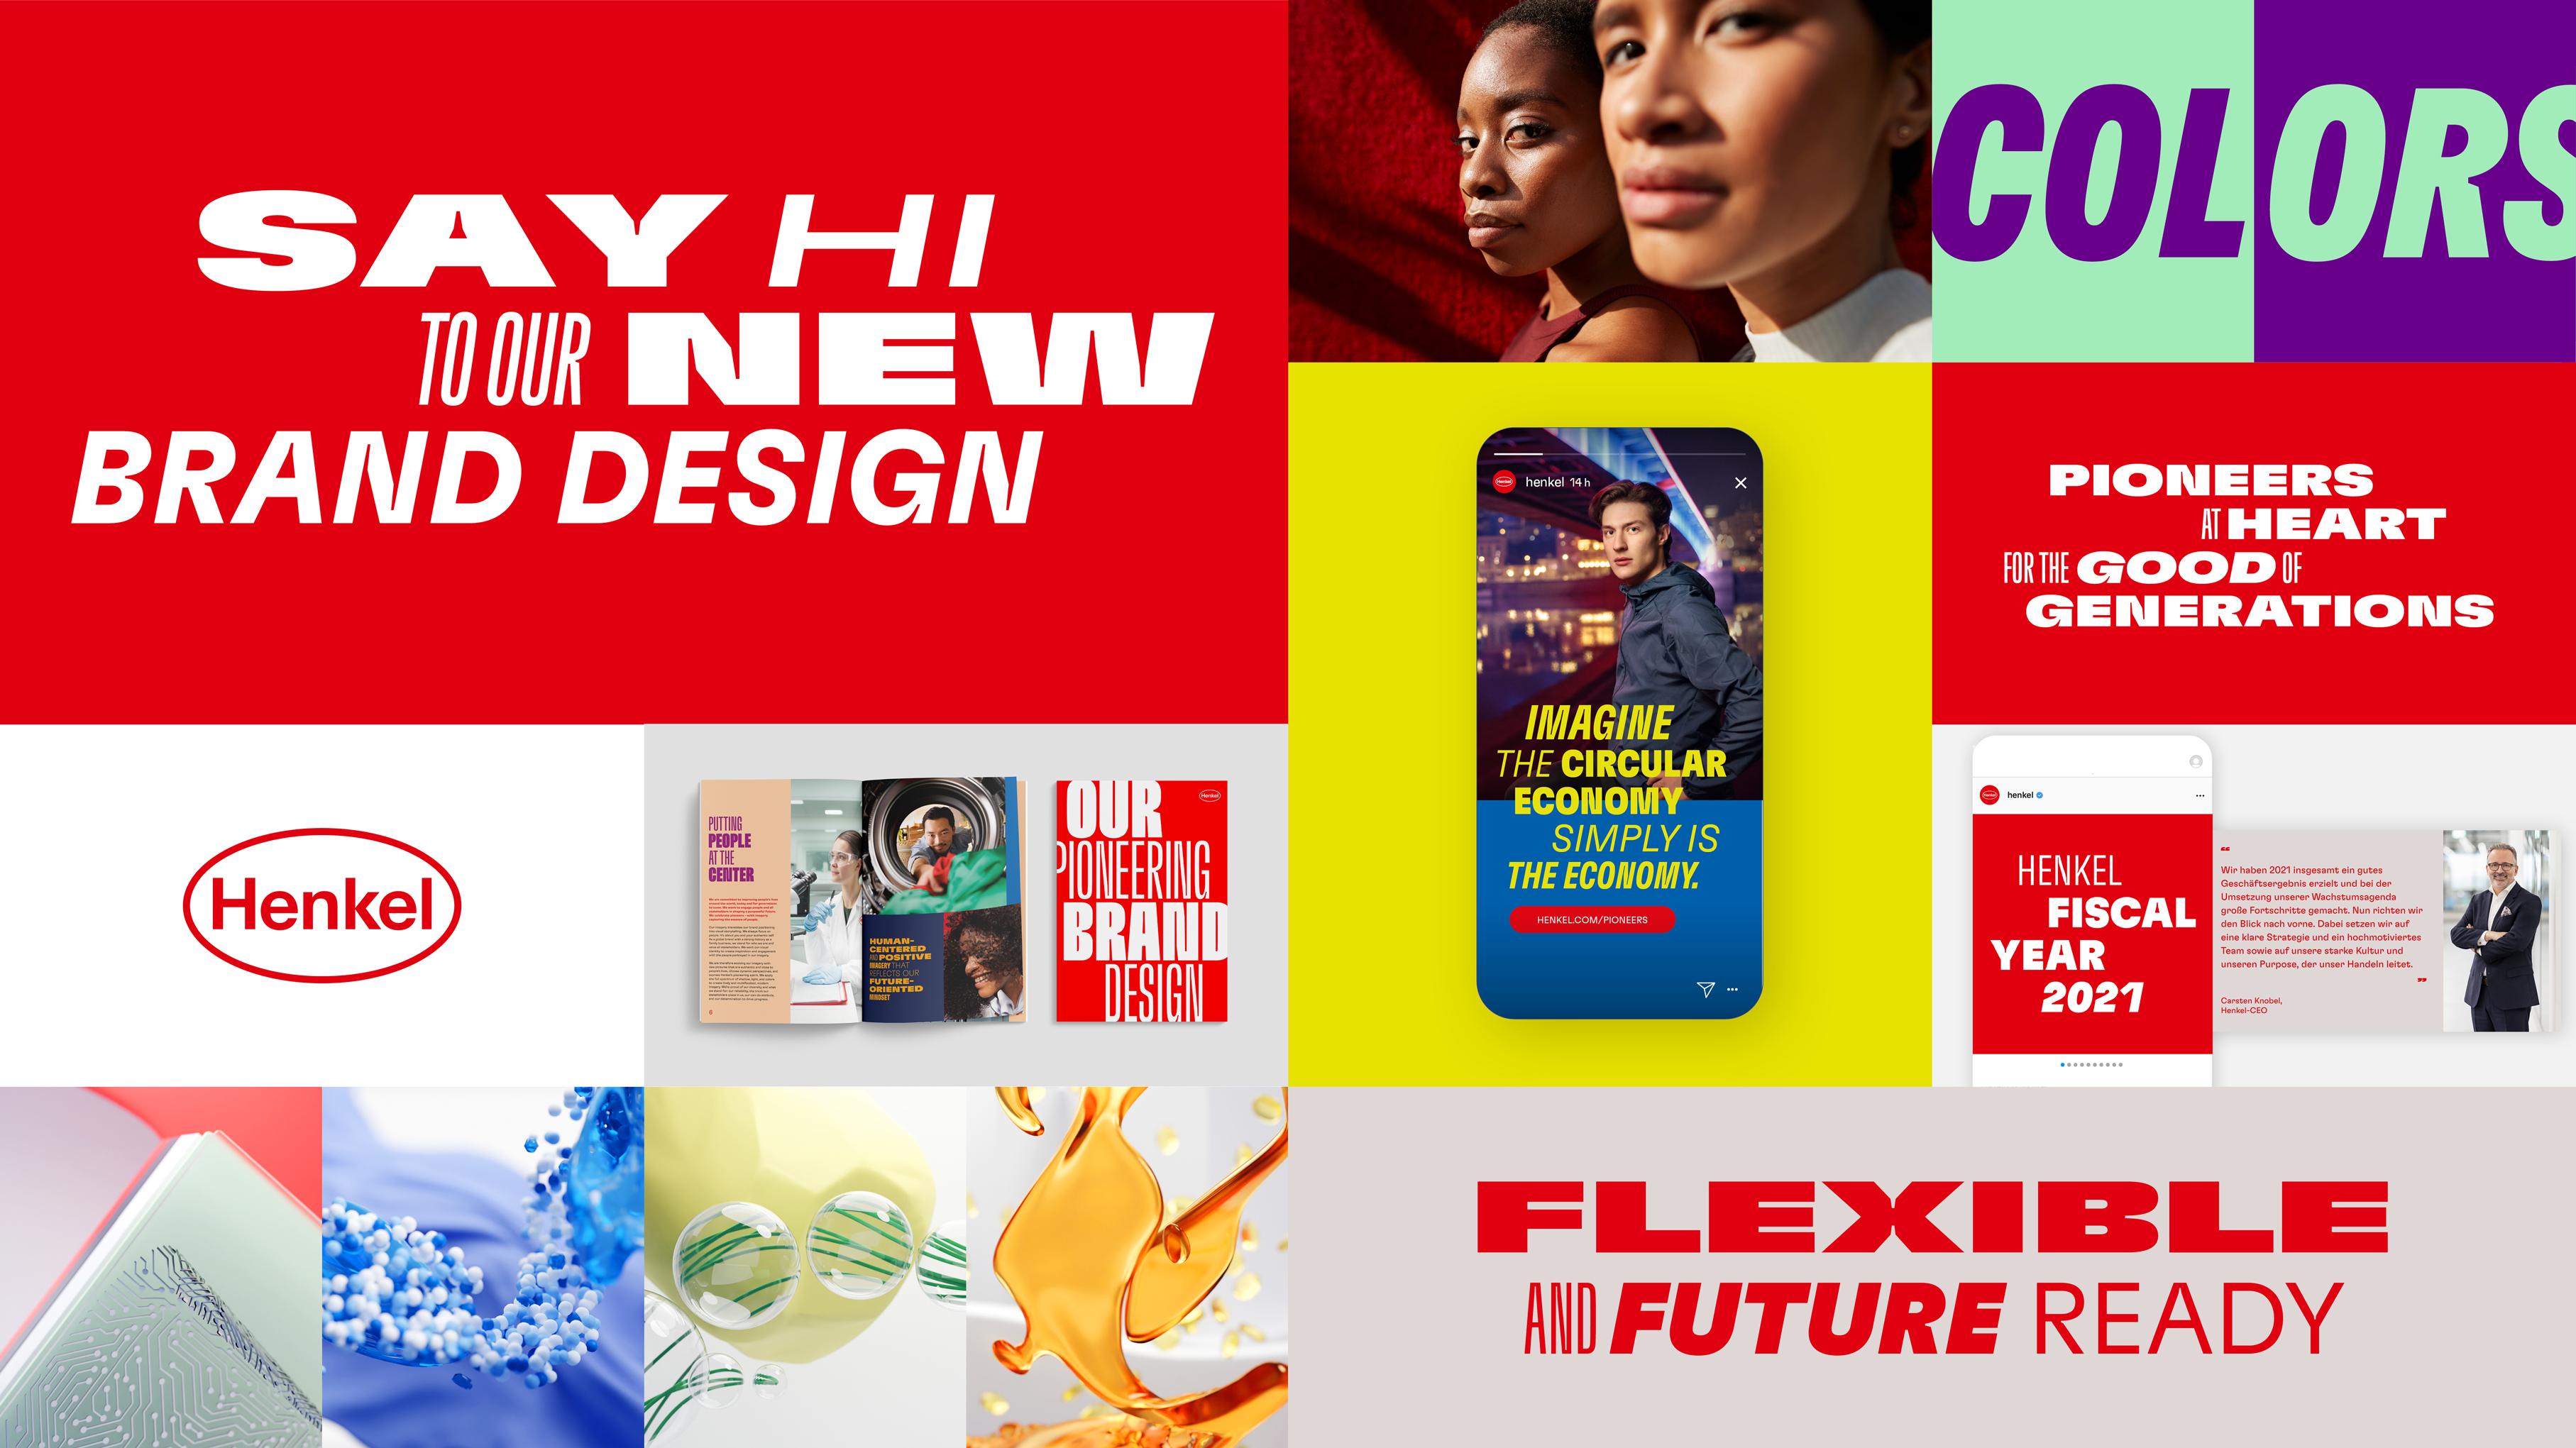 New Henkel brand identity